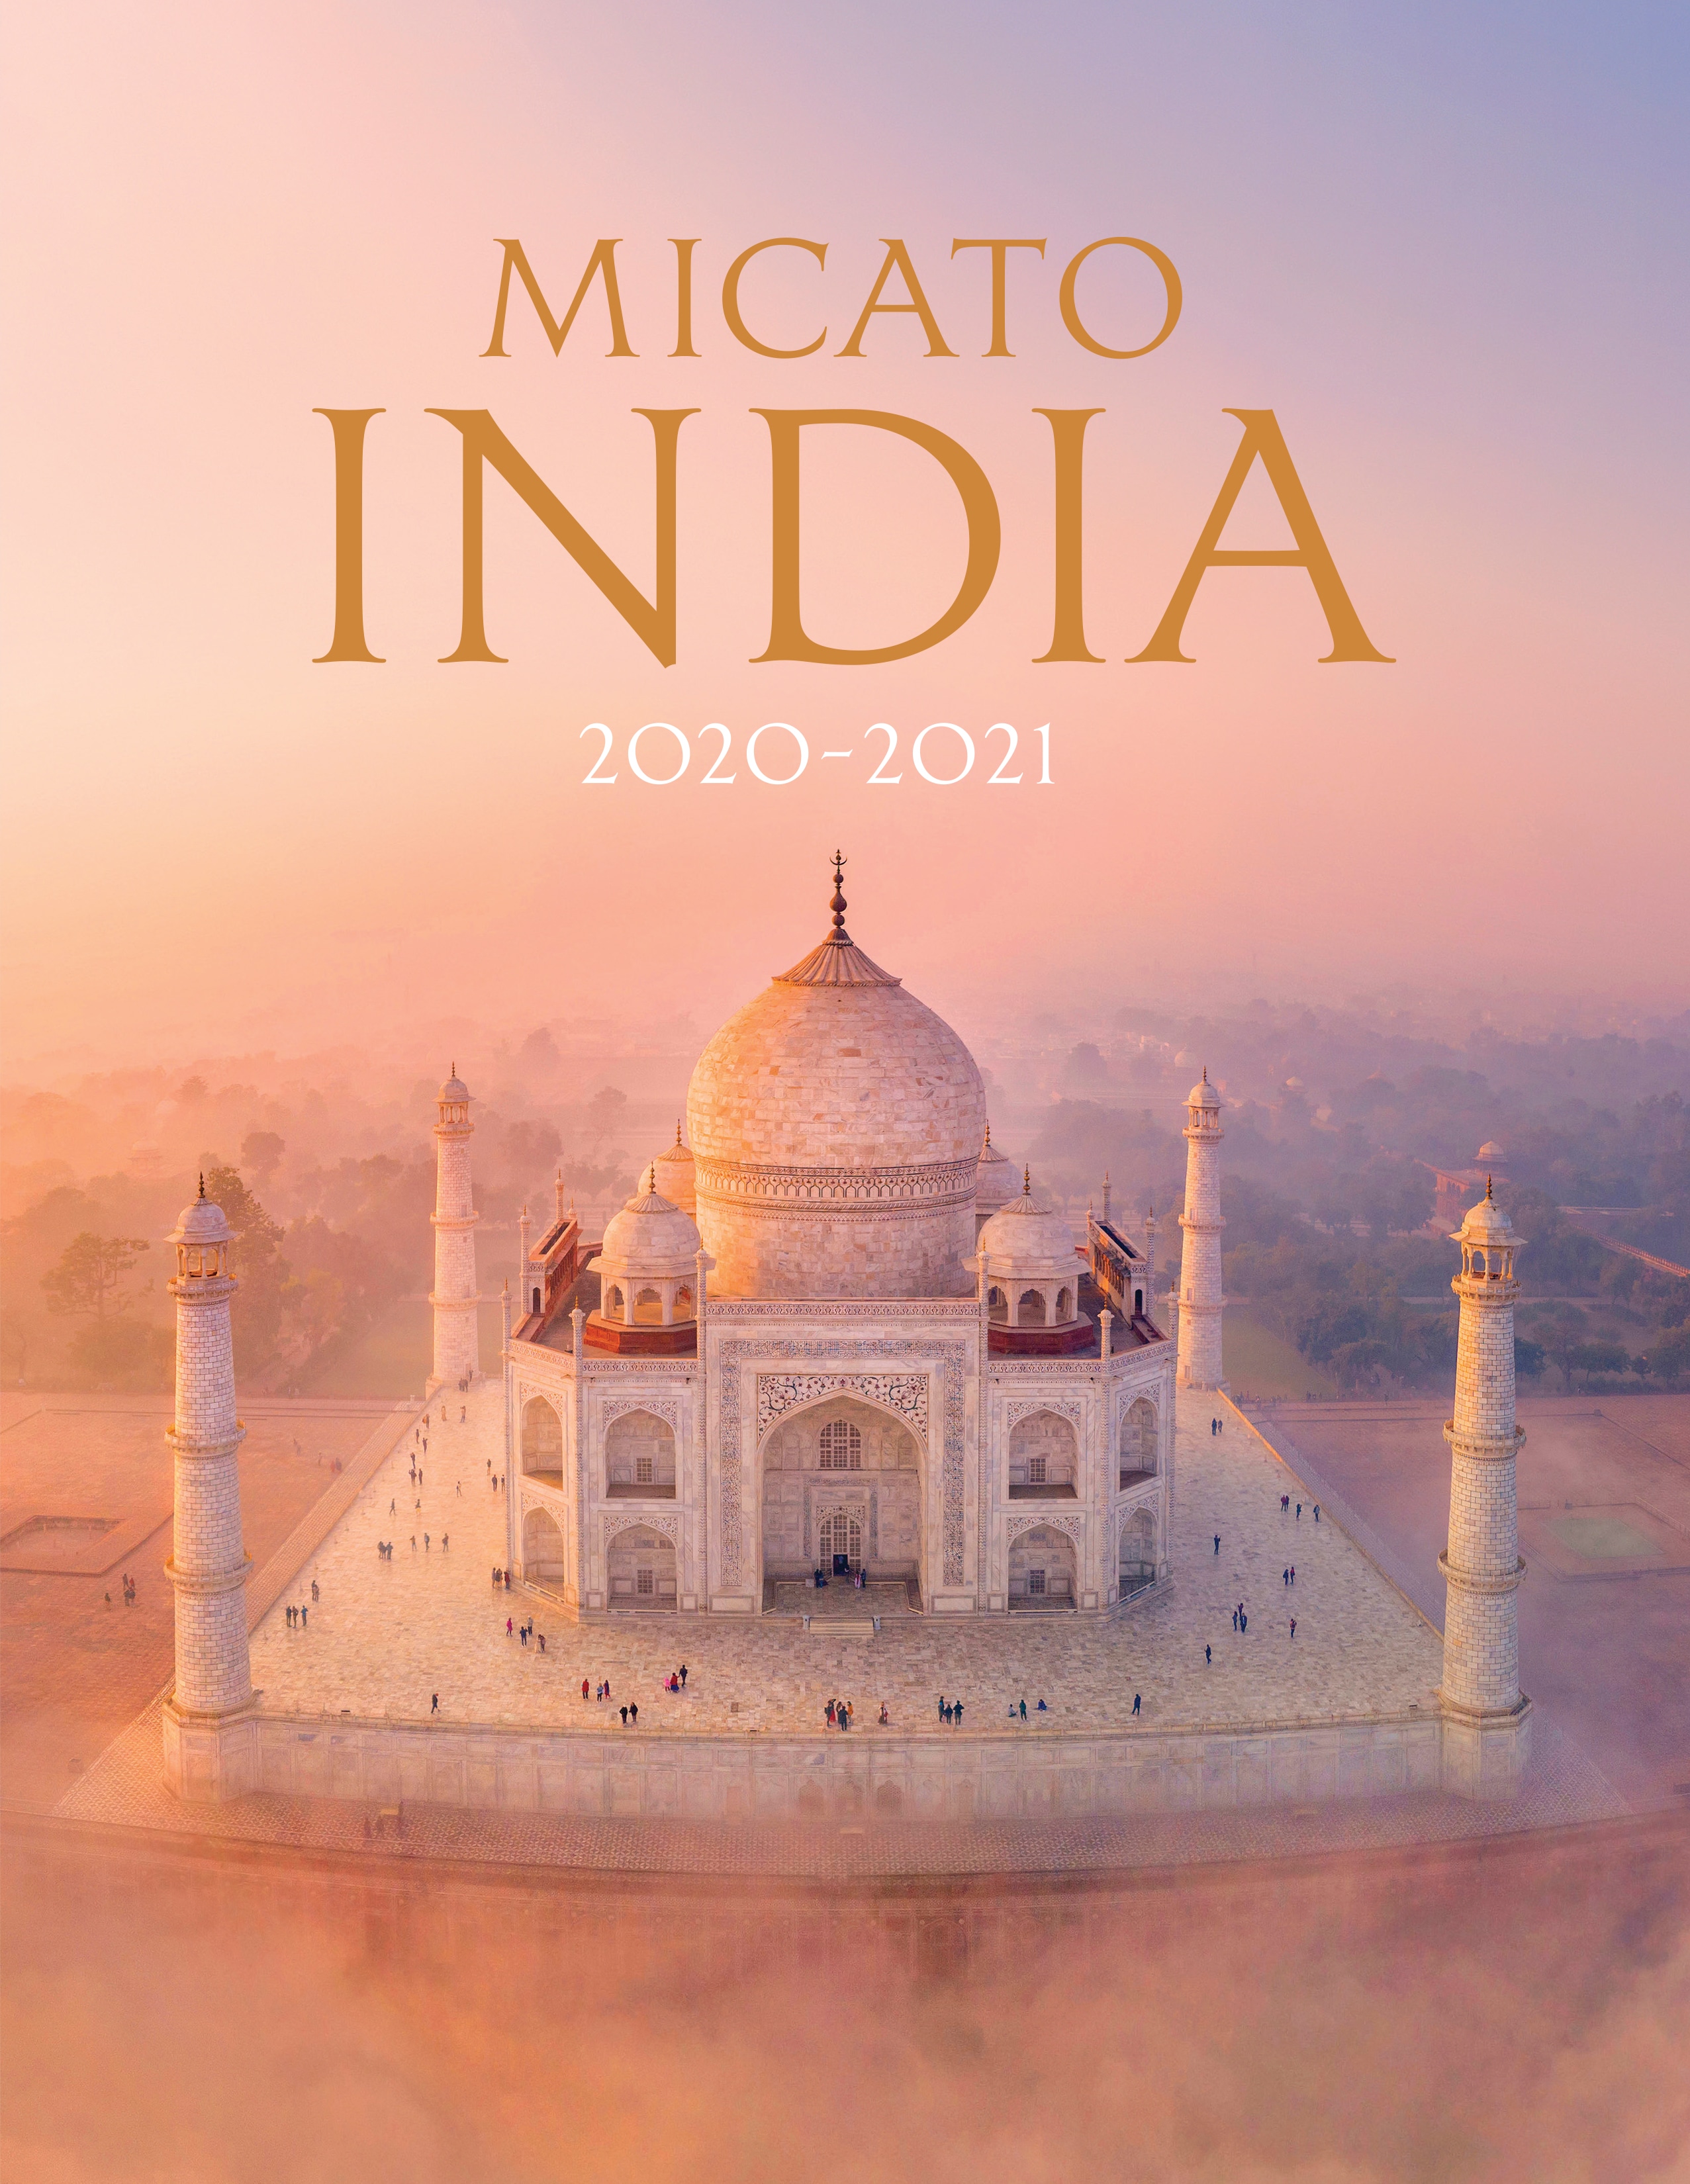 Micato's India Brochure